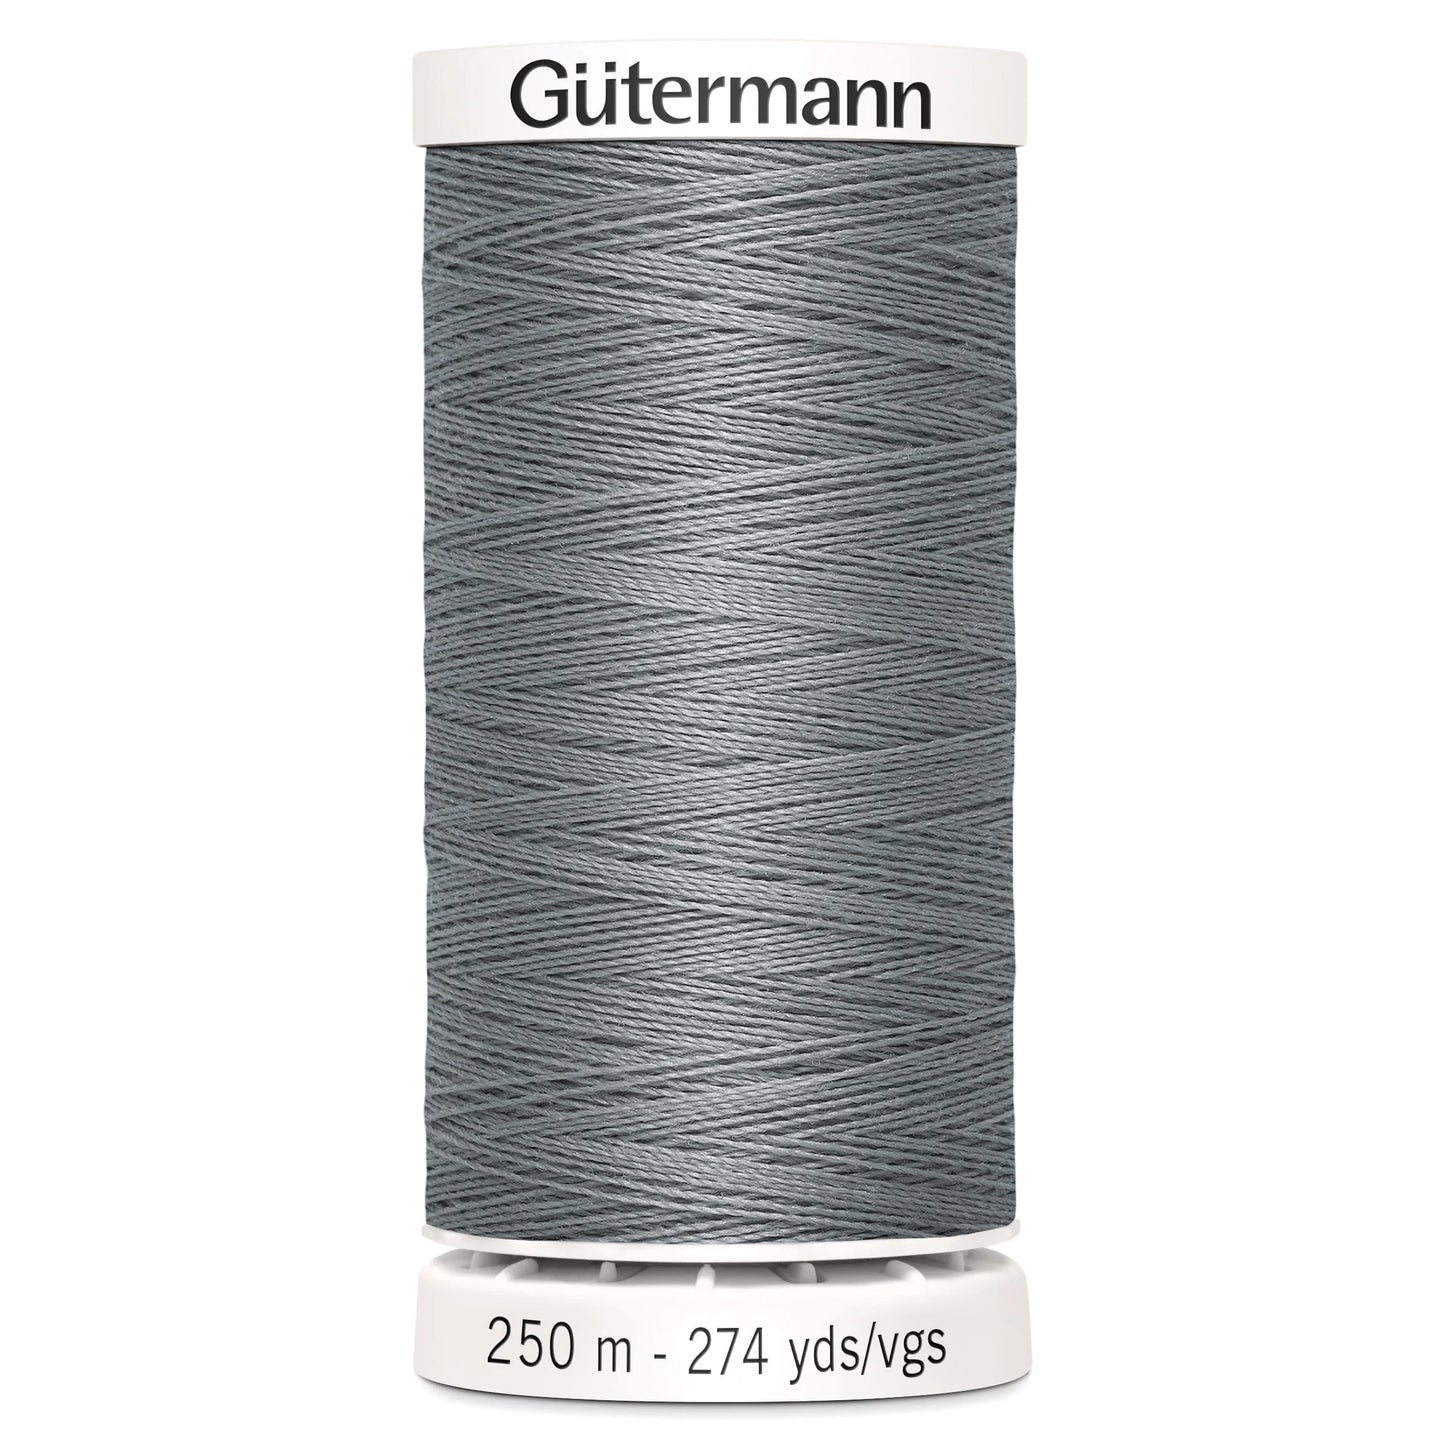 40 Gutermann Sew All 250m - Grey